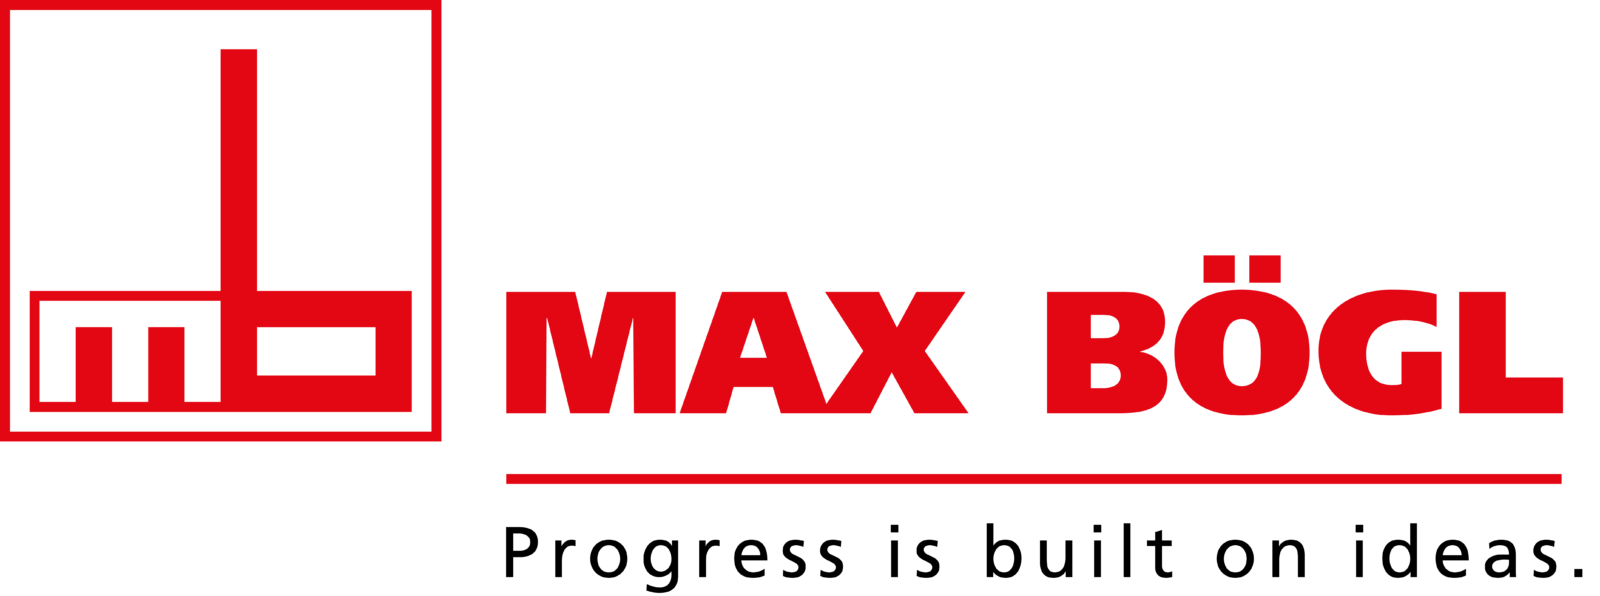 Max Boegl logo with claim